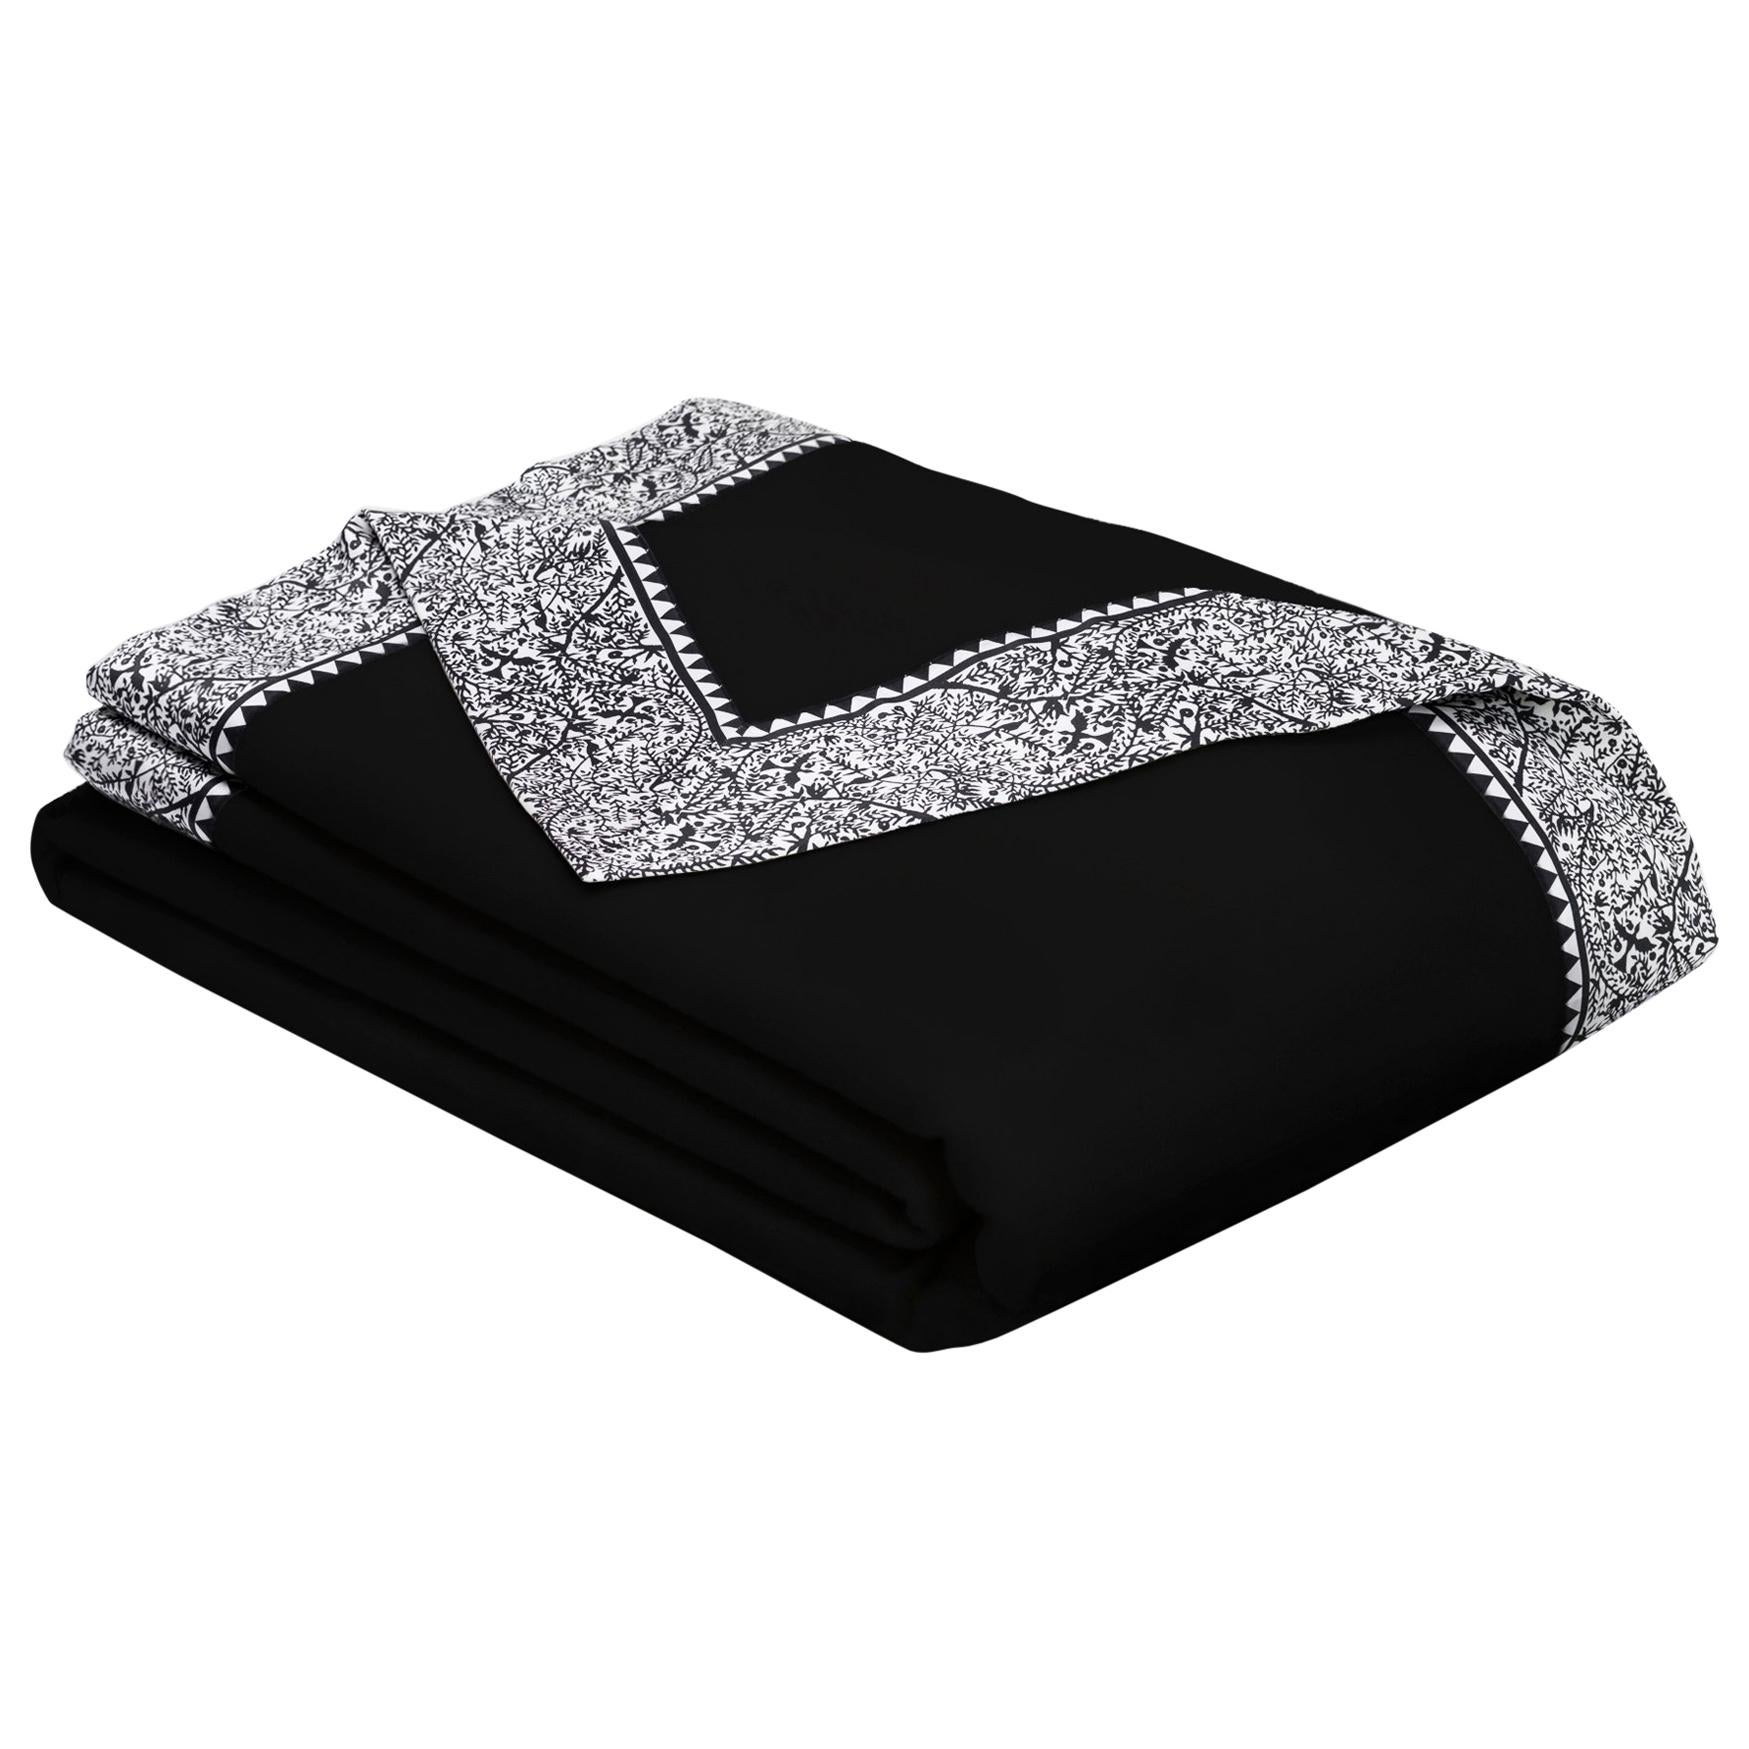 Merino Black King Size Blanket with Grey Print Border by JG SWITZER For Sale